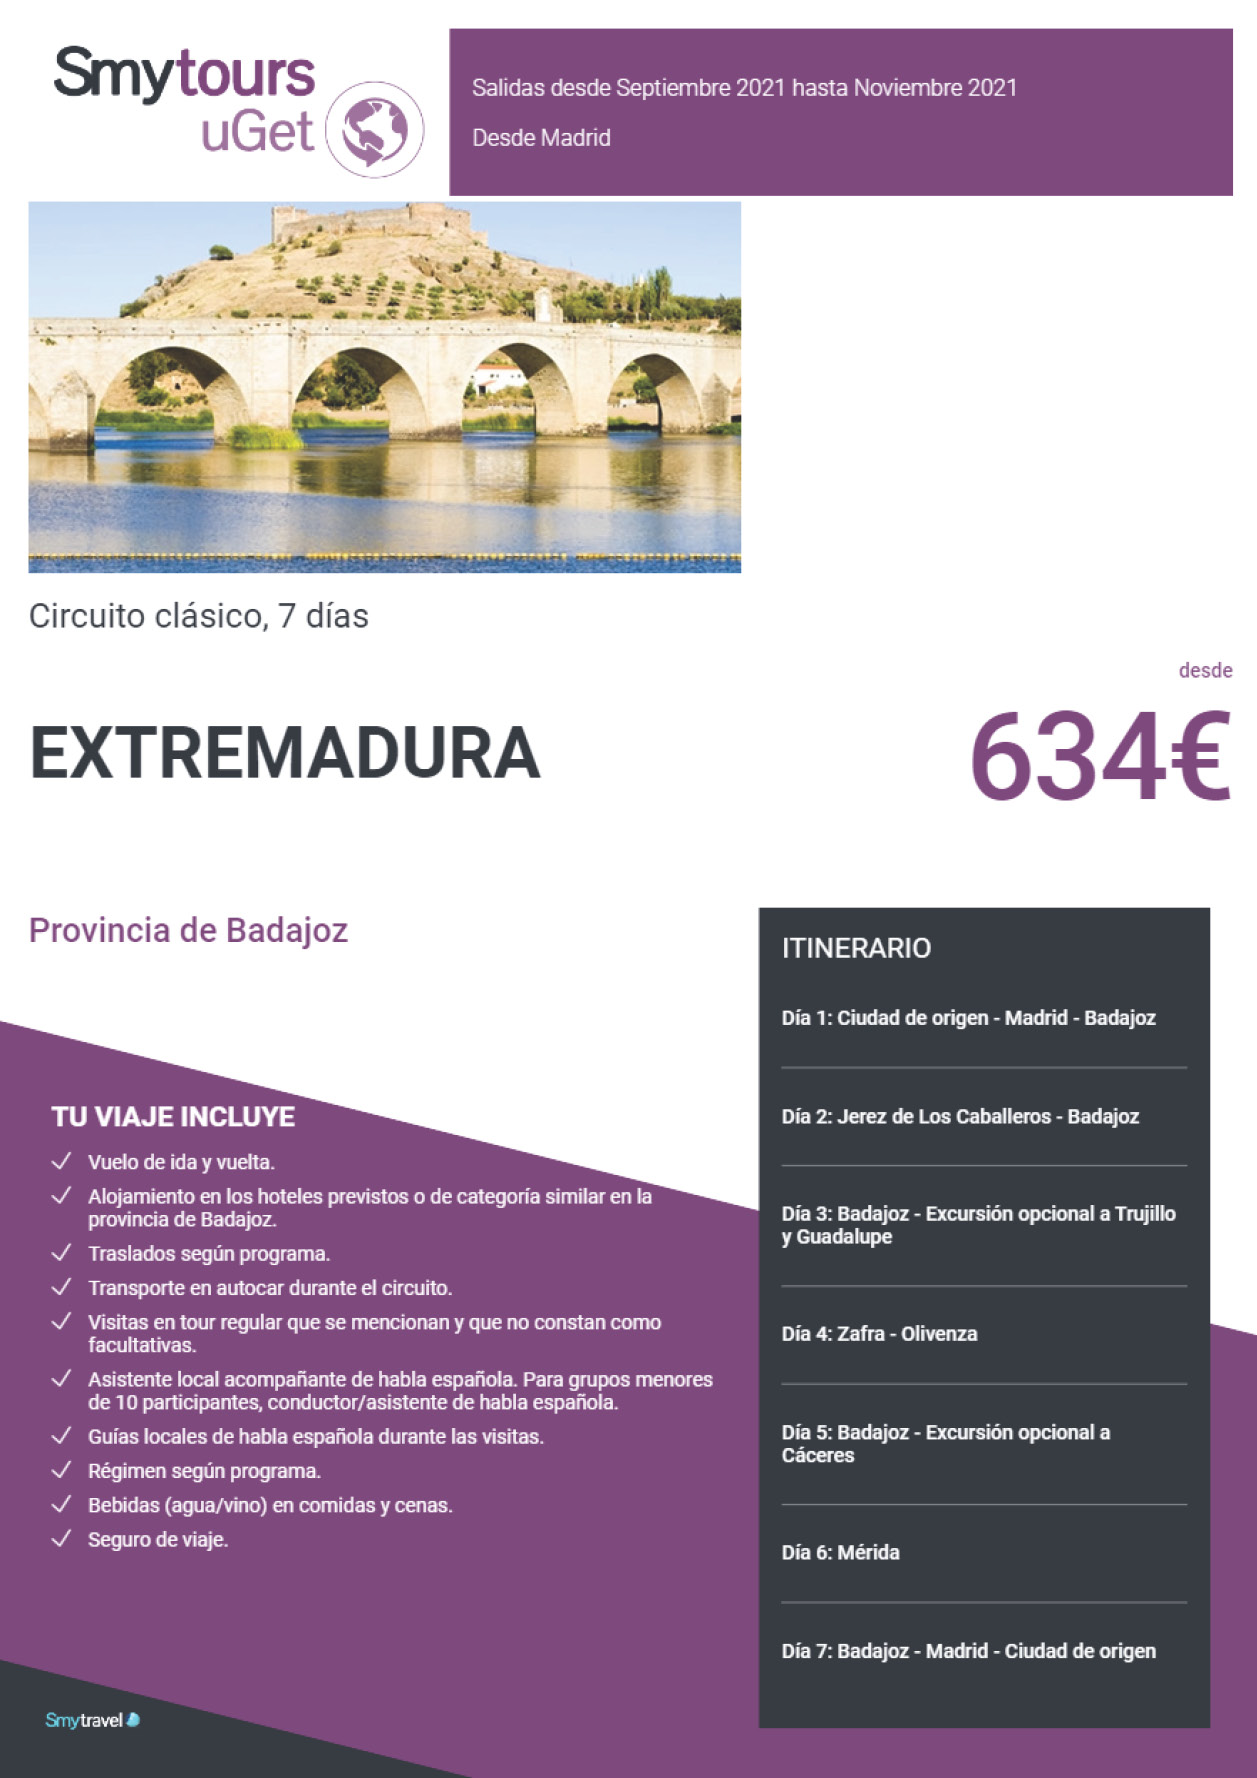 Oferta Smytravel Circuito Provincia de Badajoz 7 dias salidas Madrid desde 634 €